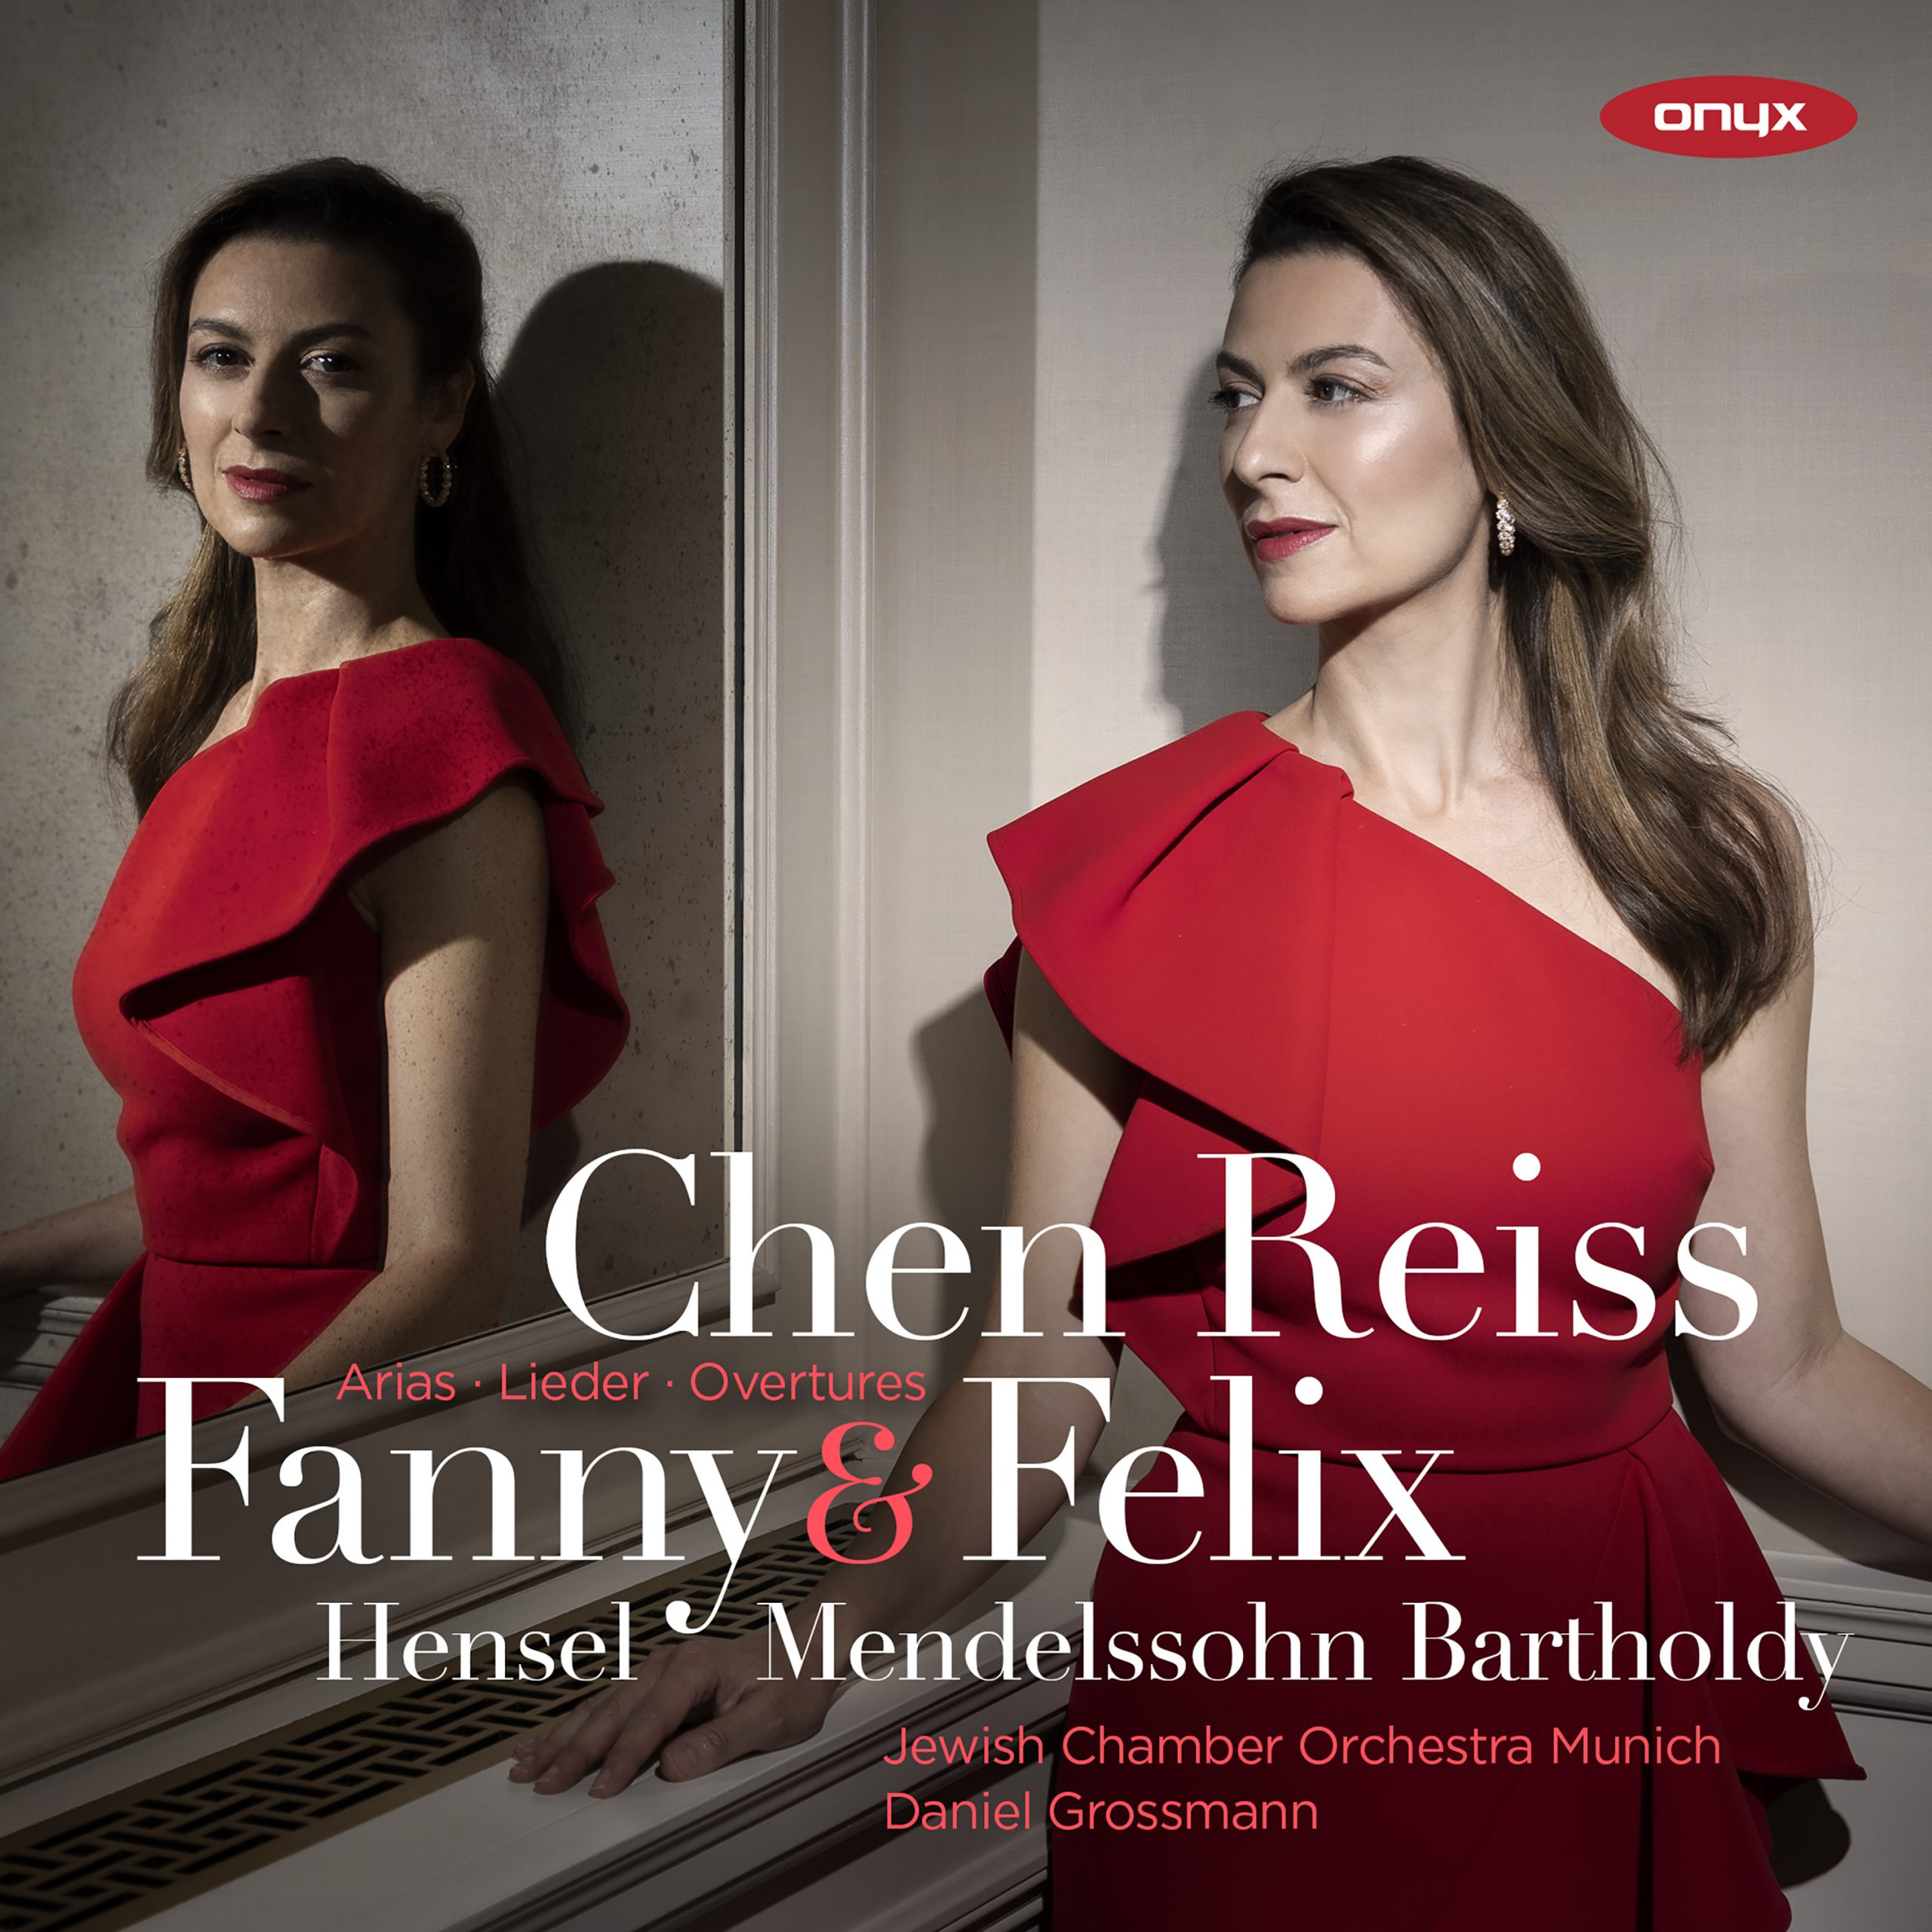 Fanny Hensel and Felix Mendelssohn